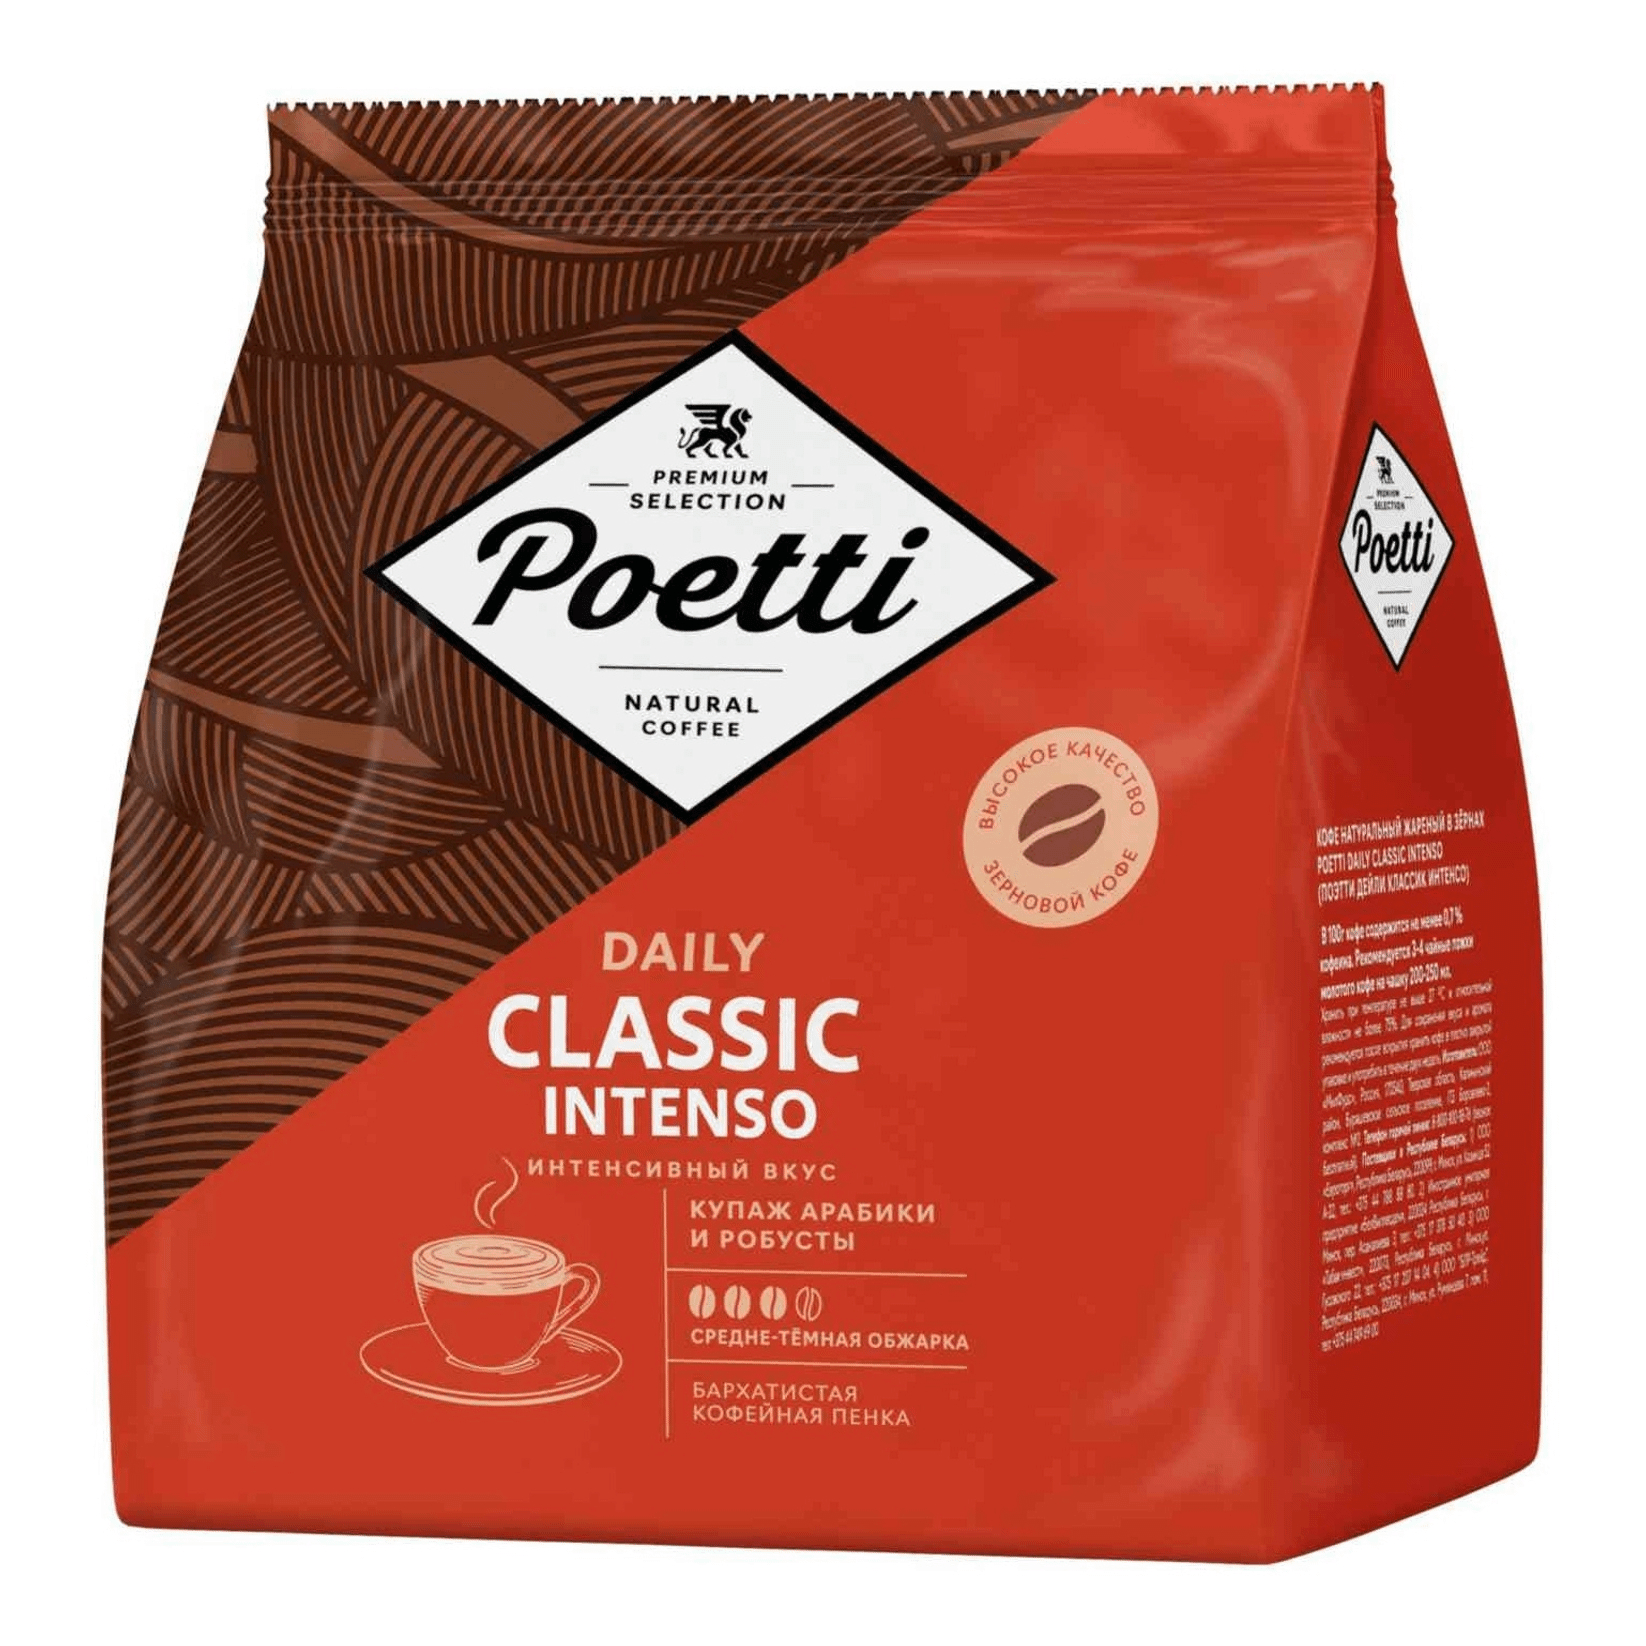 Кофе в зернах Poetti Daily Classic Intenso 450 г кофе в зернах poetti leggenda original 250 г